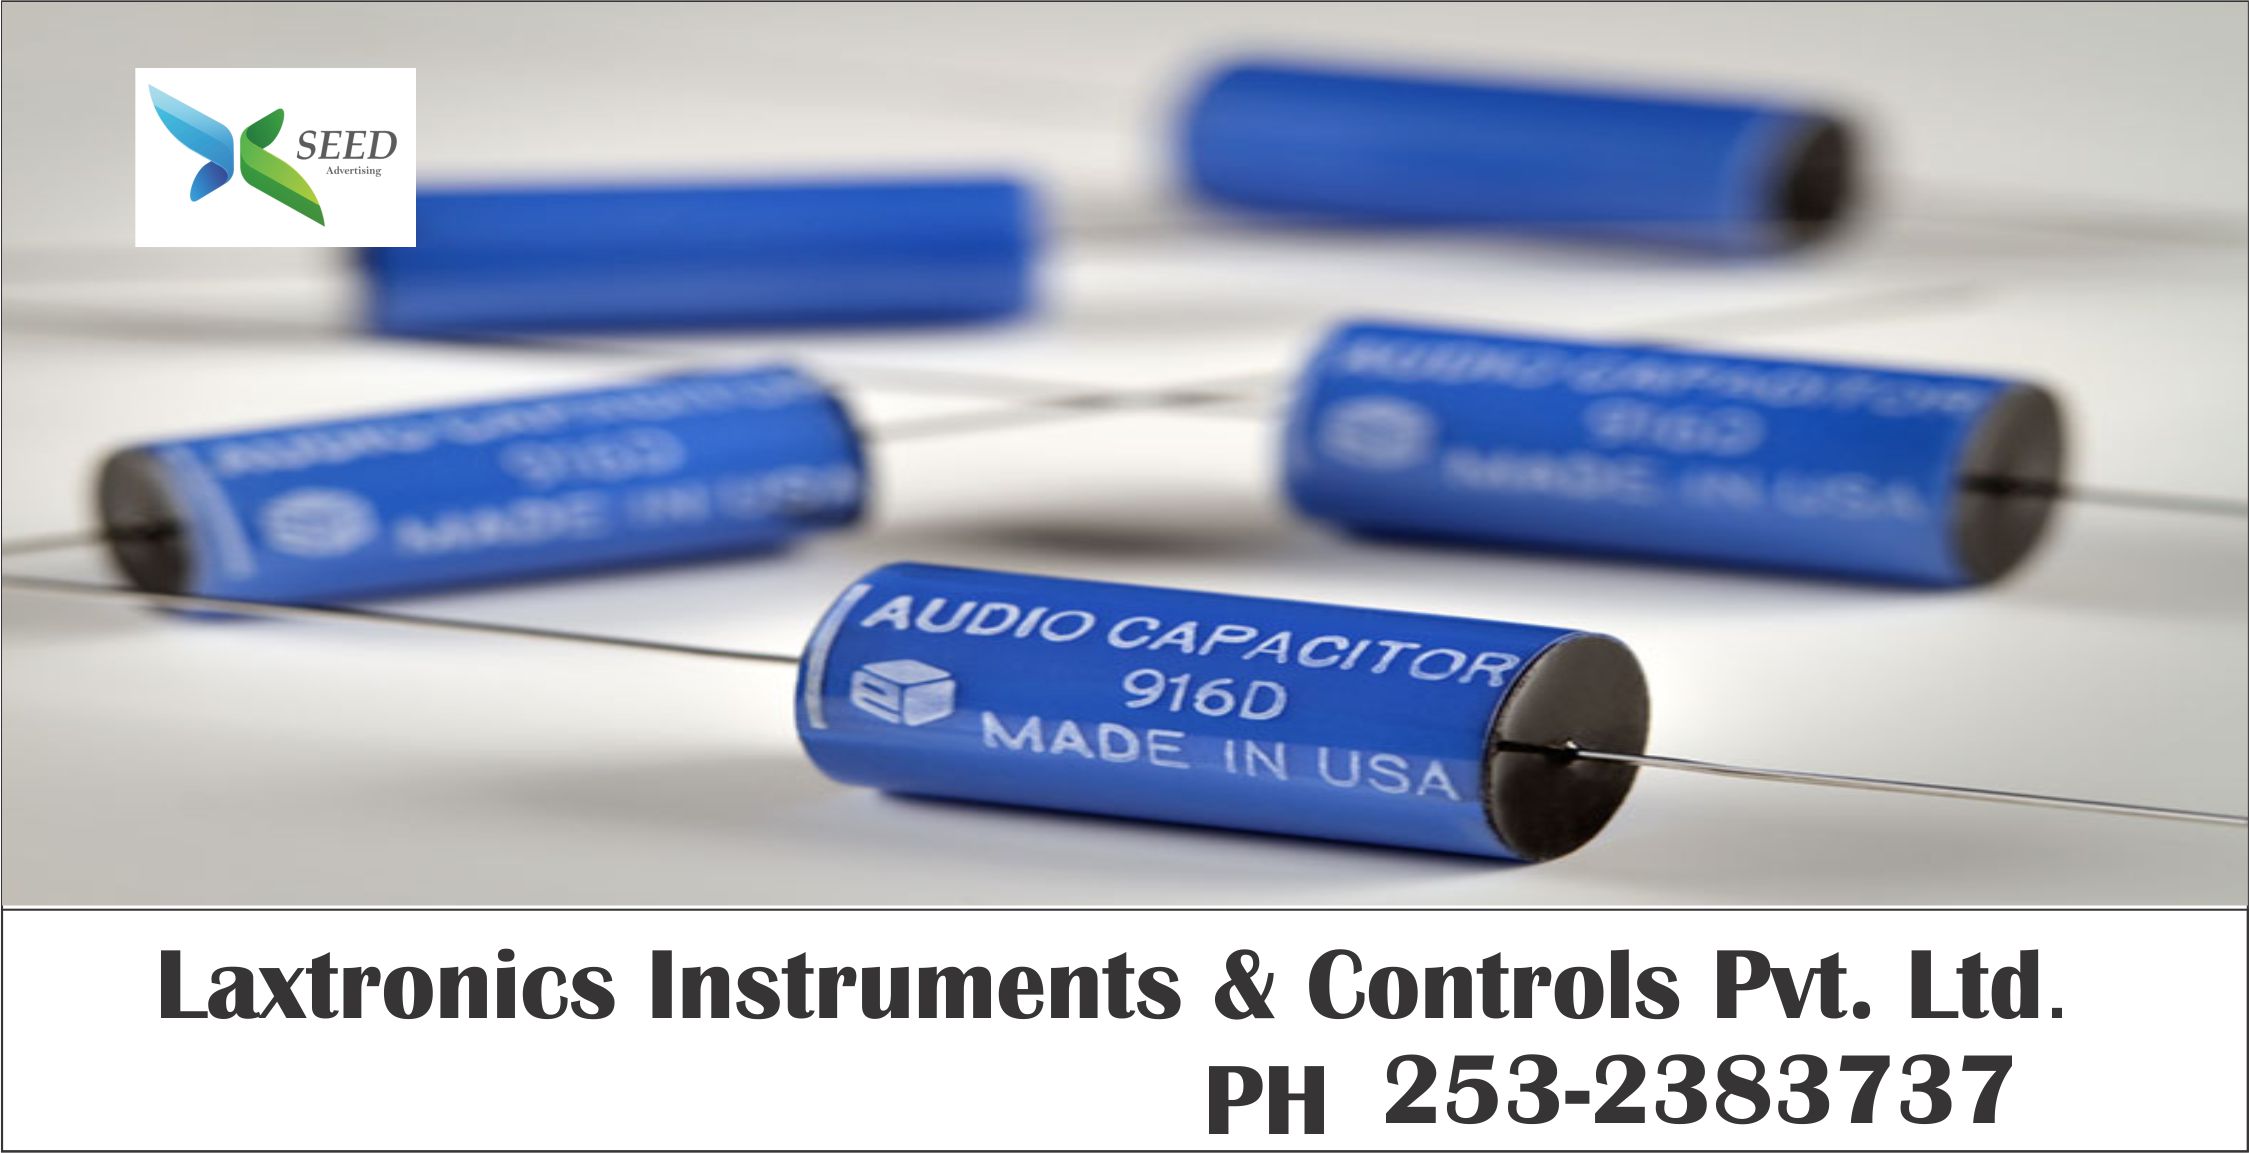 Laxtronics Instruments & Controls Pvt. Ltd.